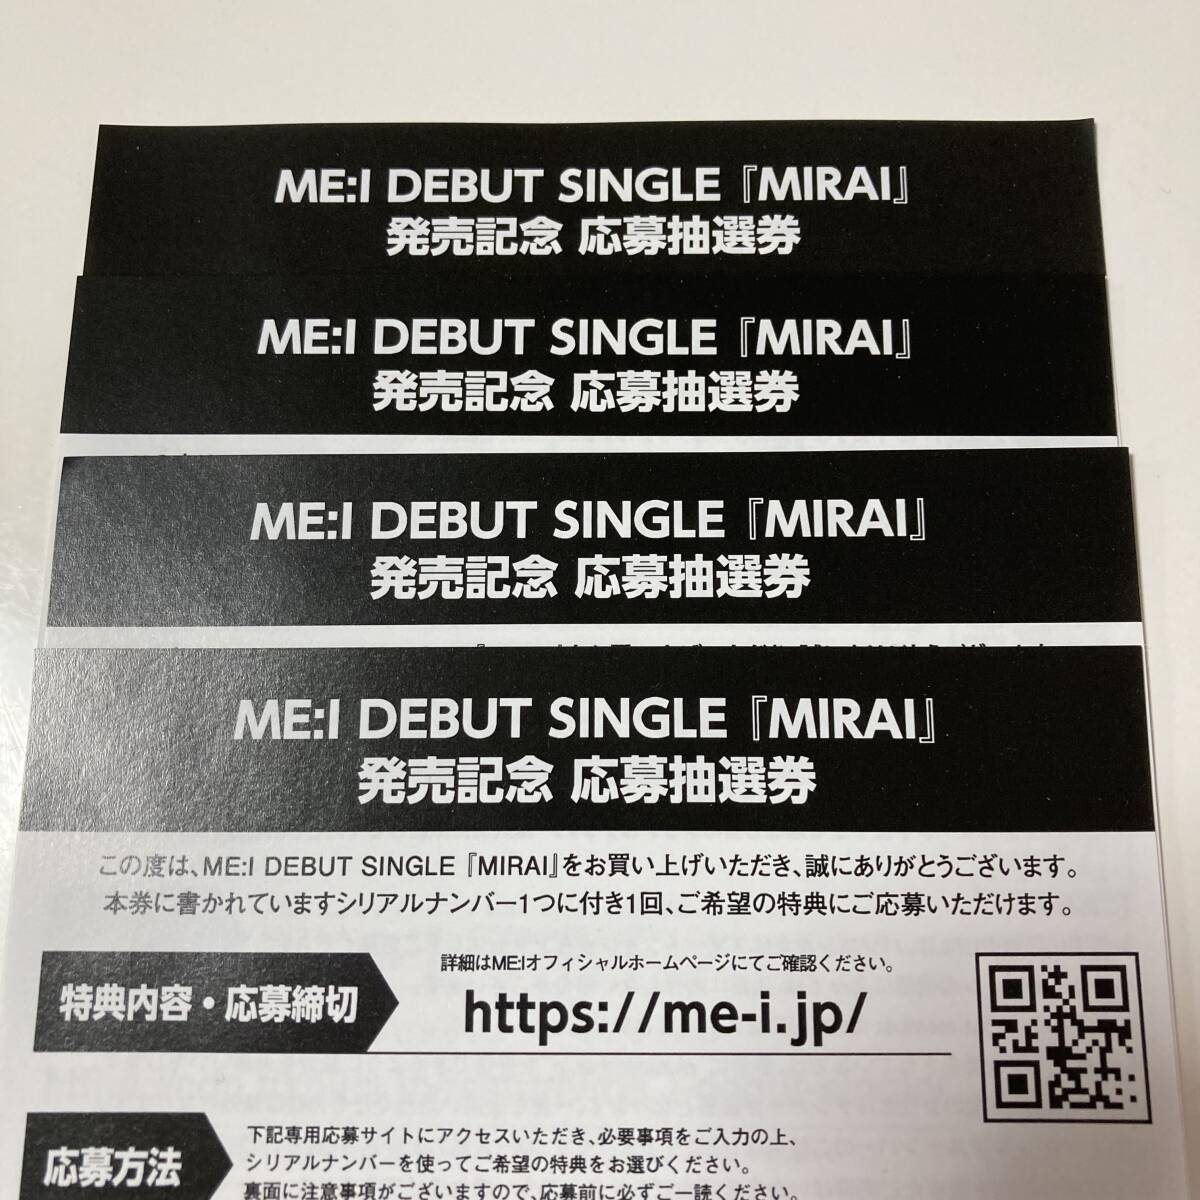 ME:I DEBUT SINGLE 『MIRAI』発売記念 応募抽選券 シリアルナンバー 4枚セットの画像1